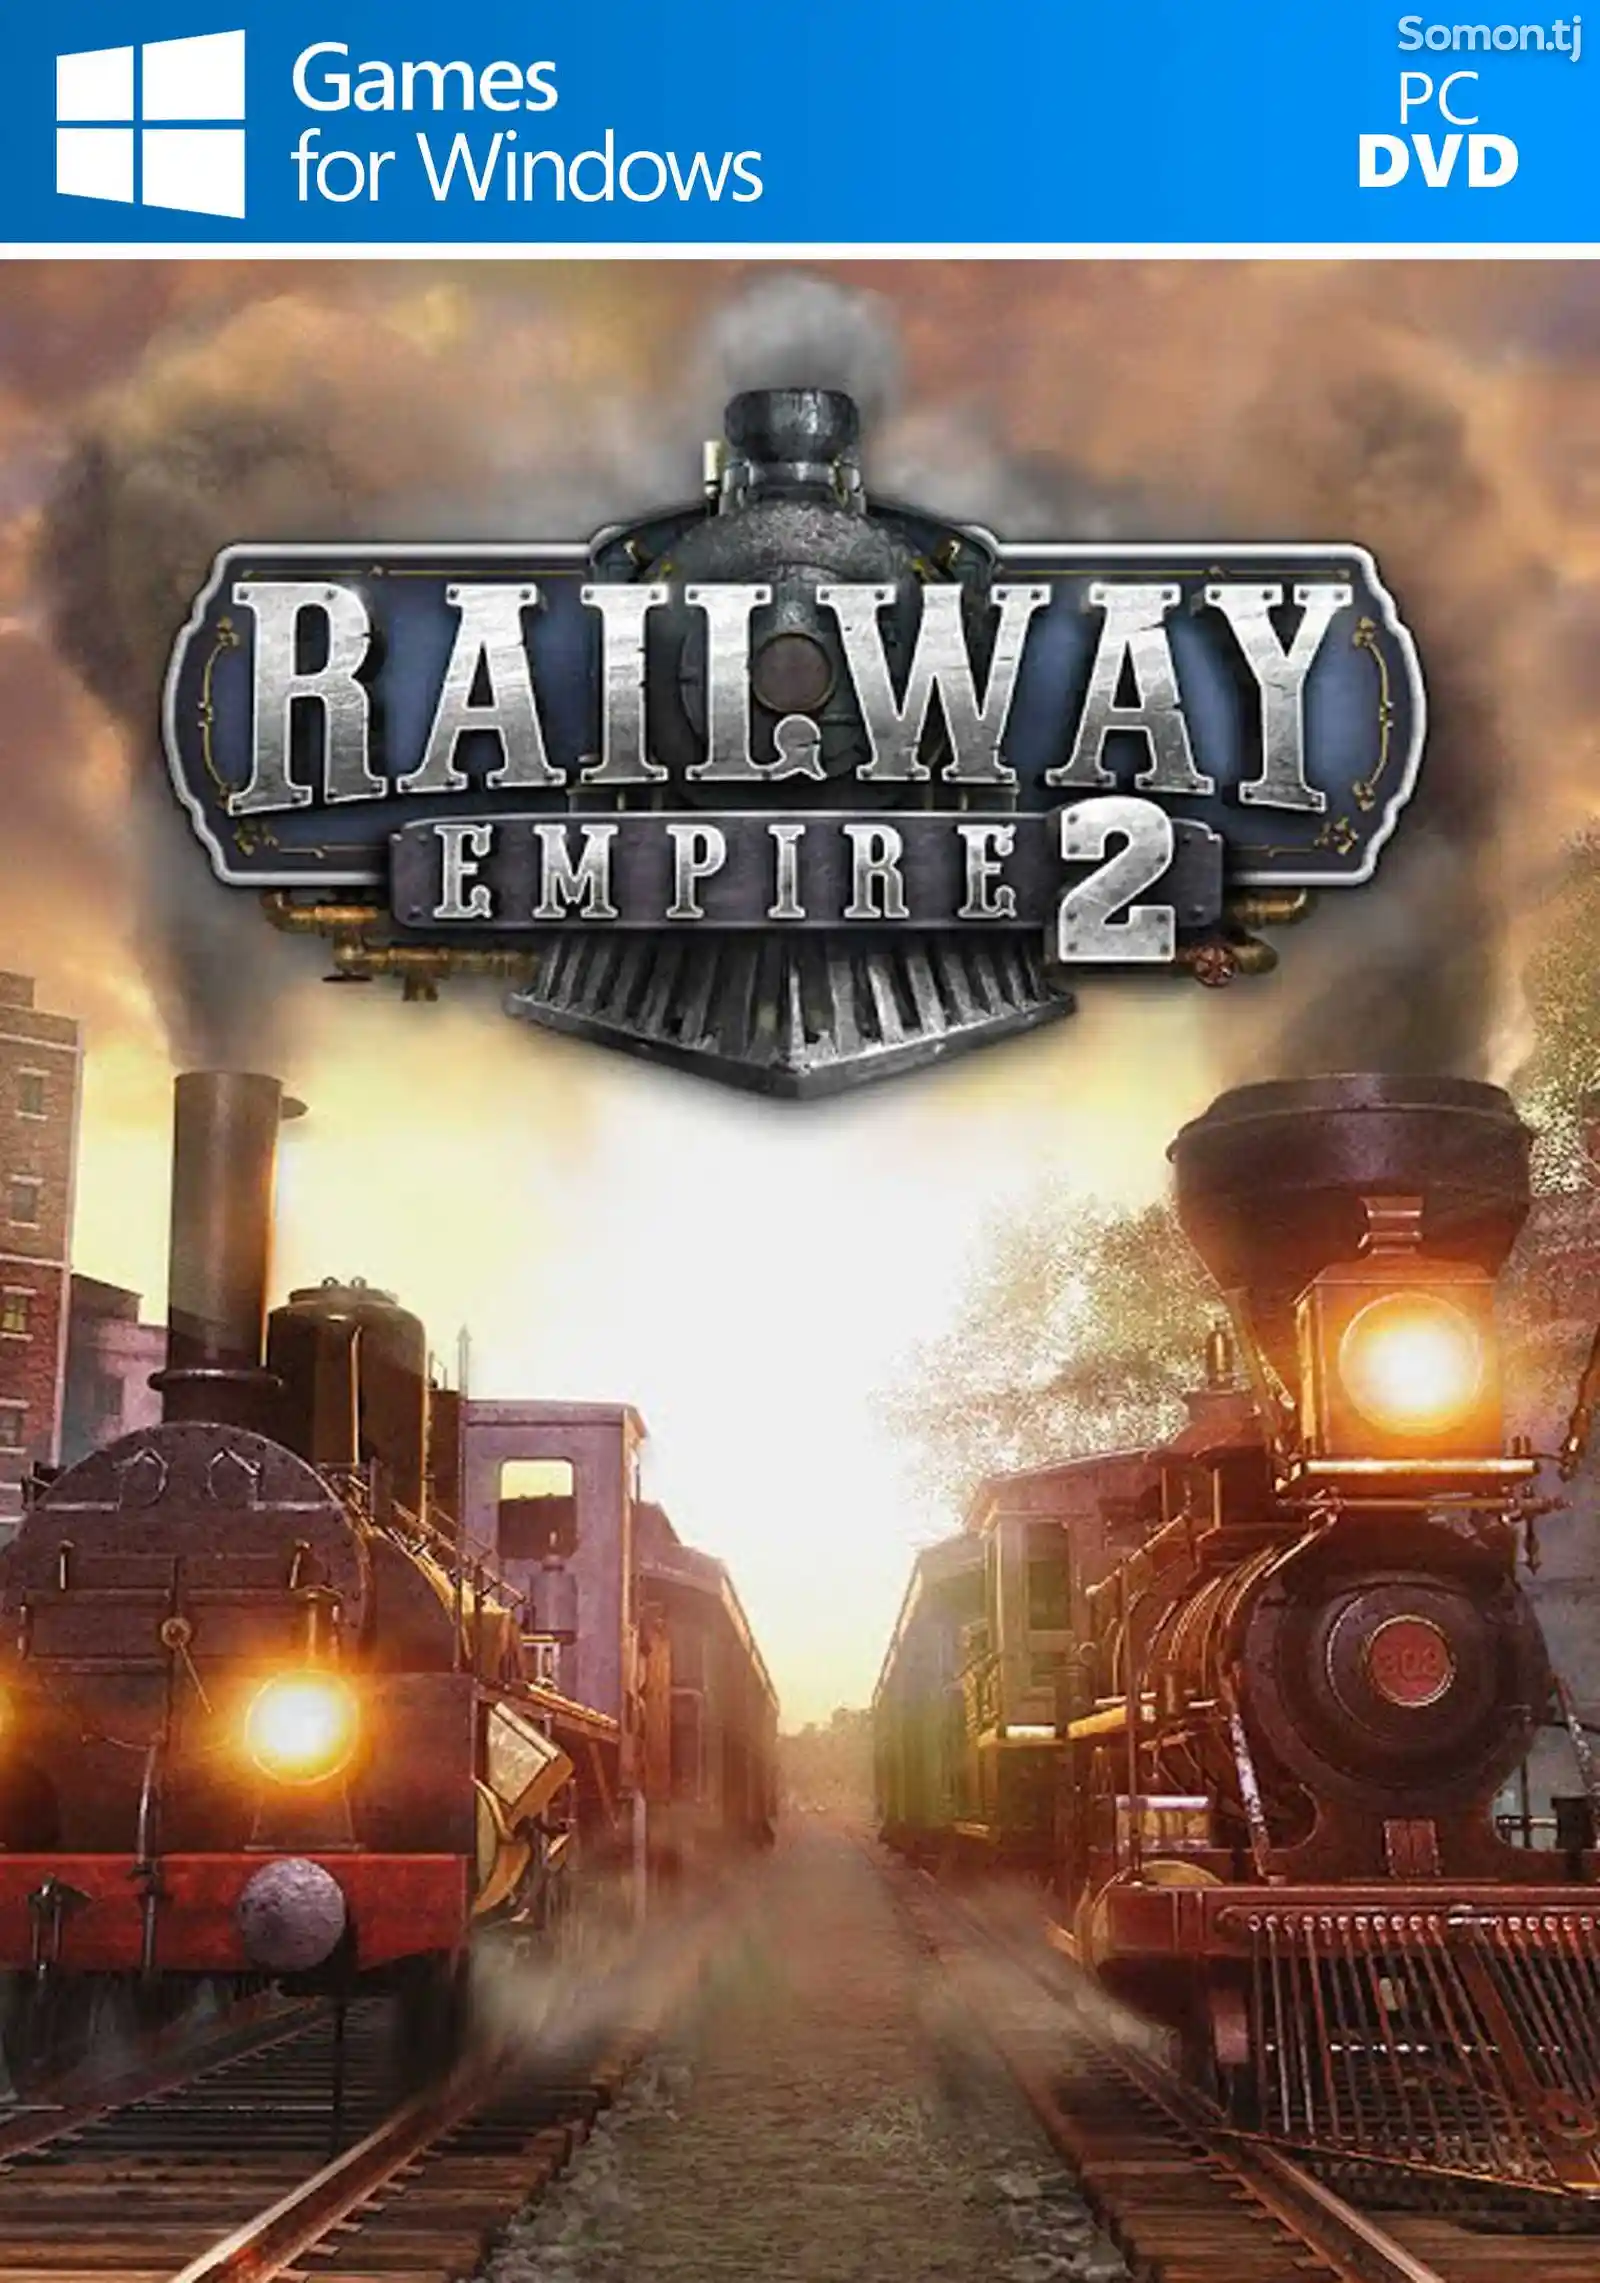 Игра Railway empire 2 для компьютера-пк-pc-1